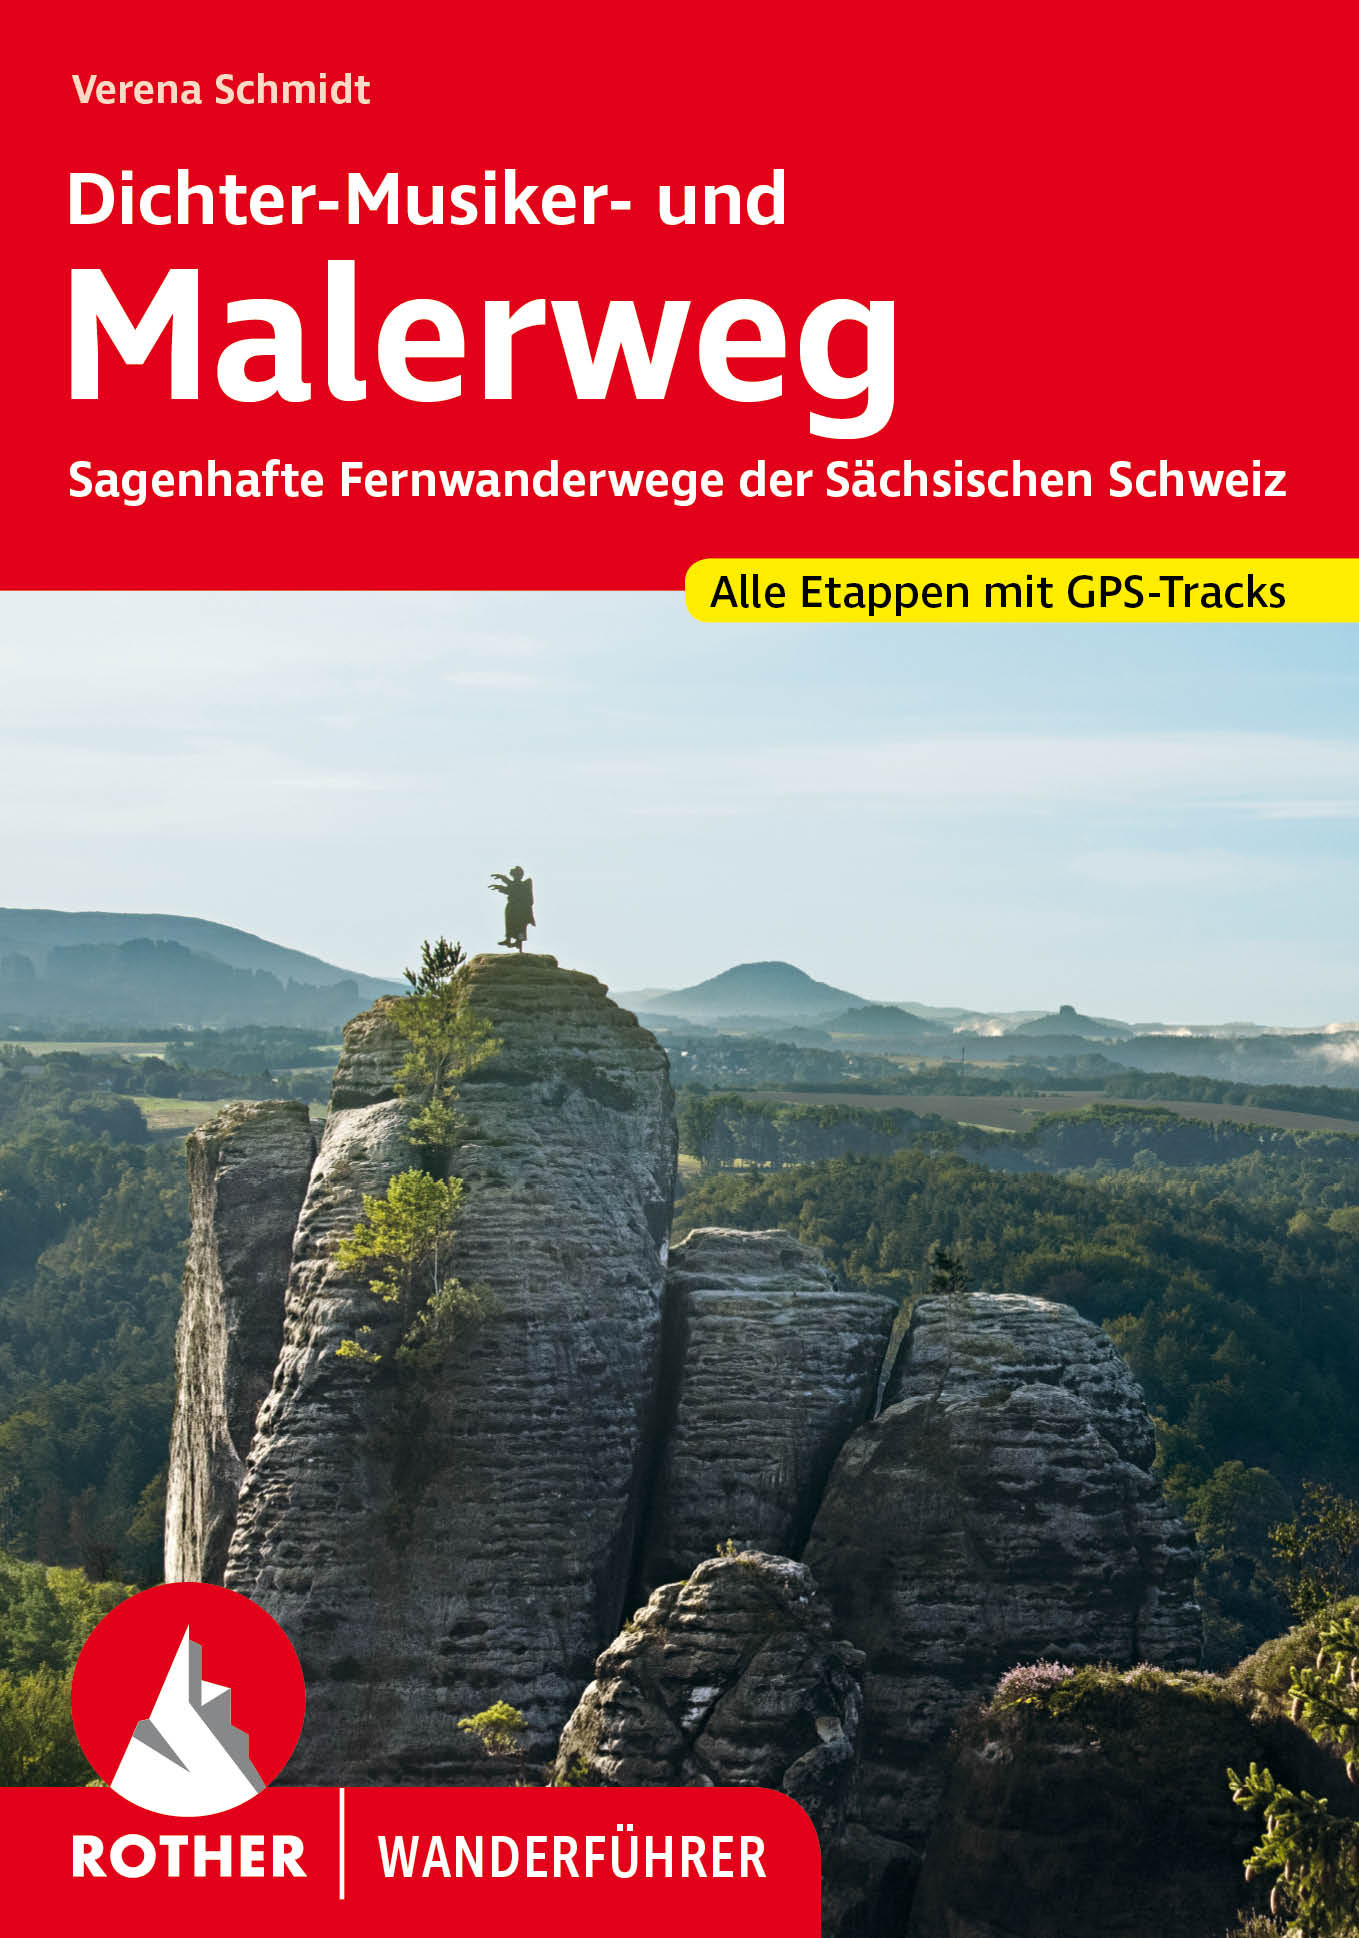 Online bestellen: Wandelgids Malerweg und Dichter-Musiker-Maler-Weg | Rother Bergverlag